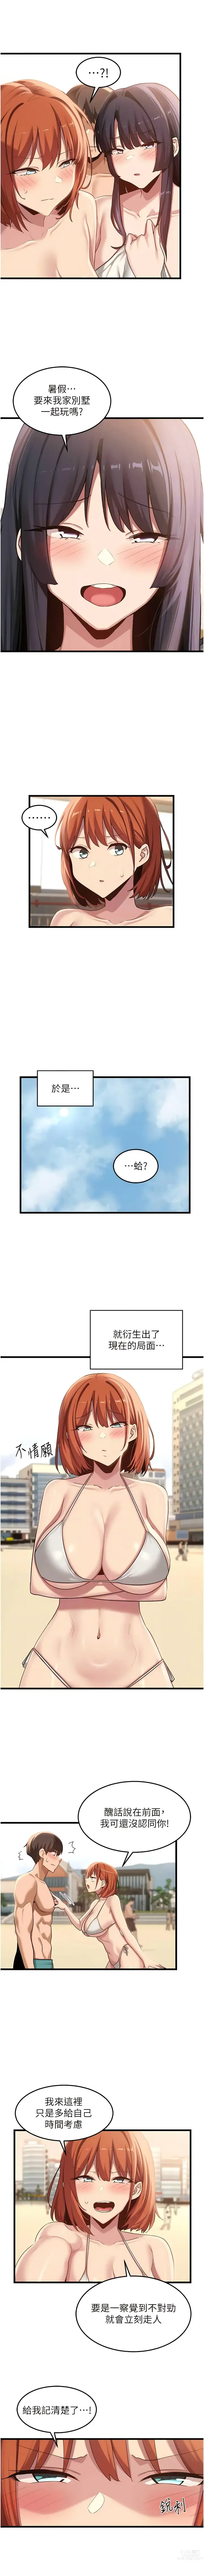 Page 517 of manga 深度交流會 67-109